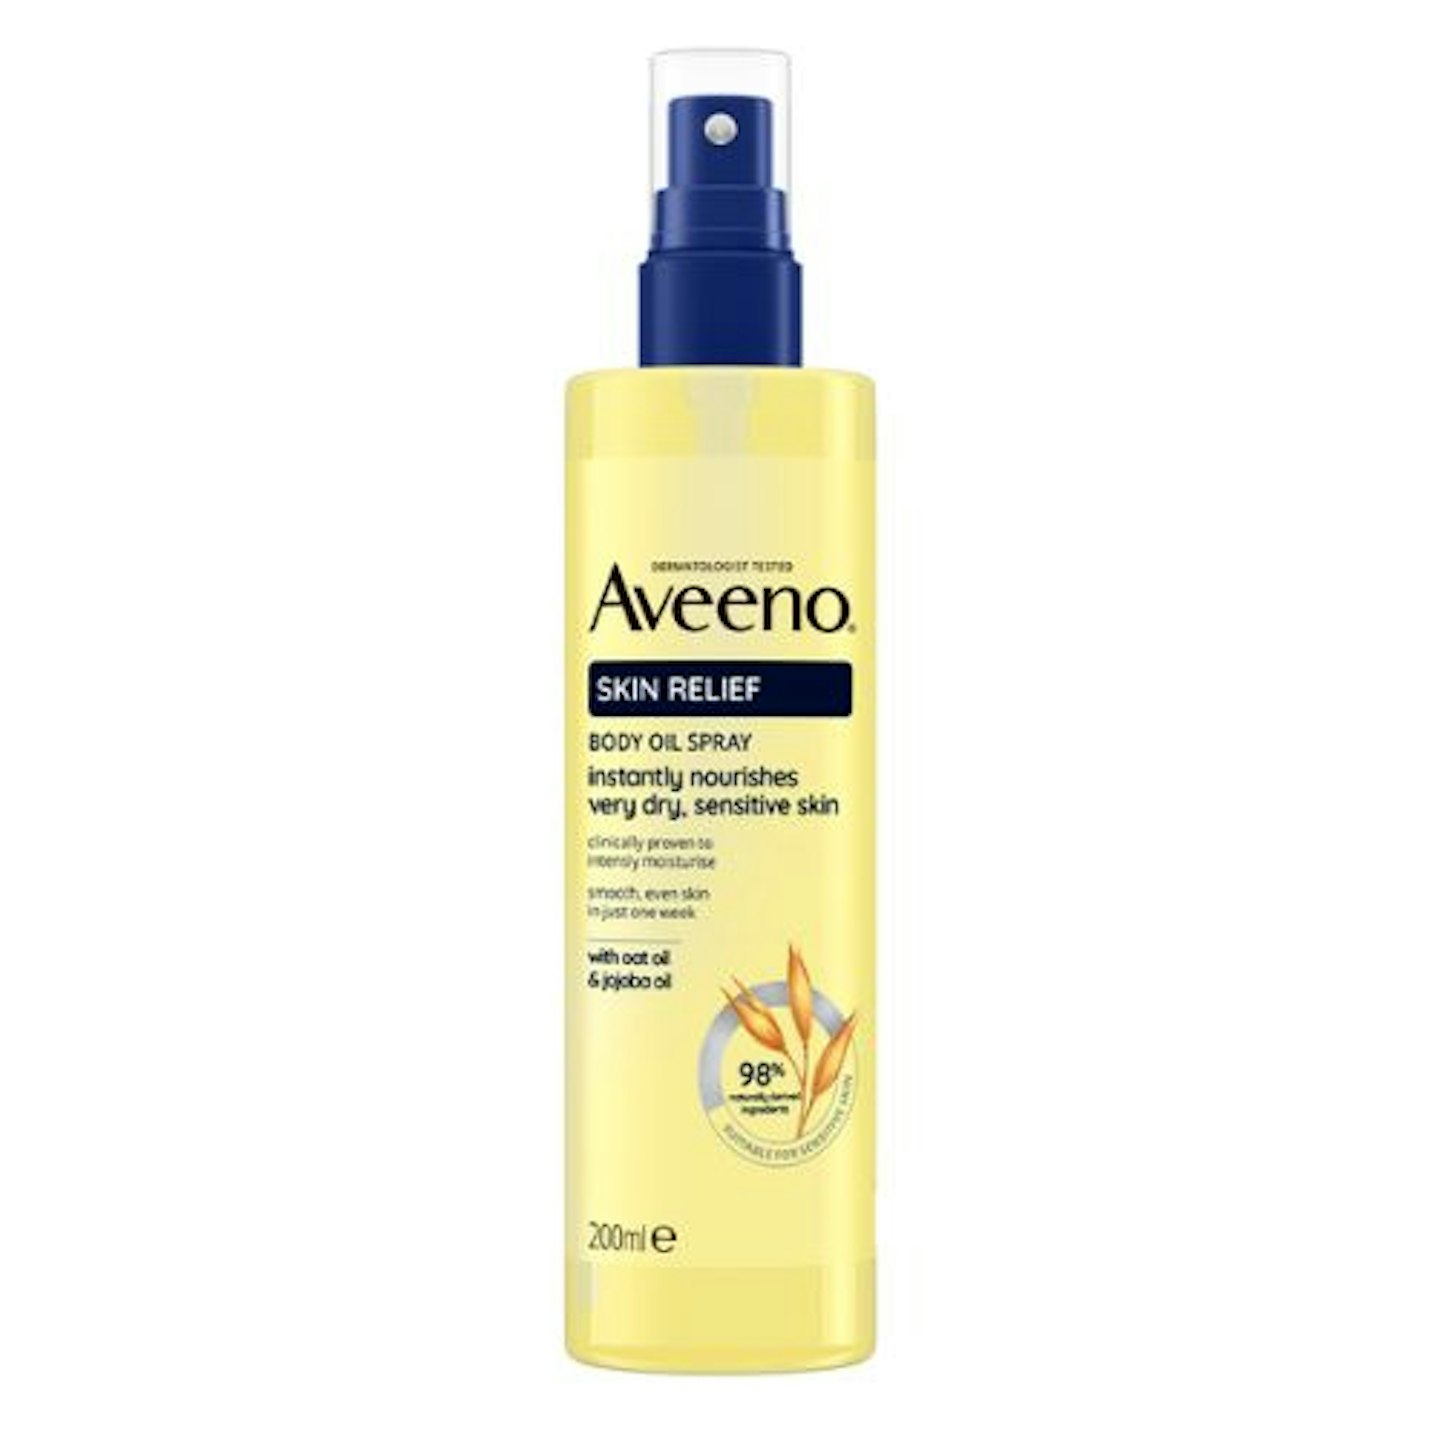 AVEENO Skin Relief Body Oil Spray 200ml